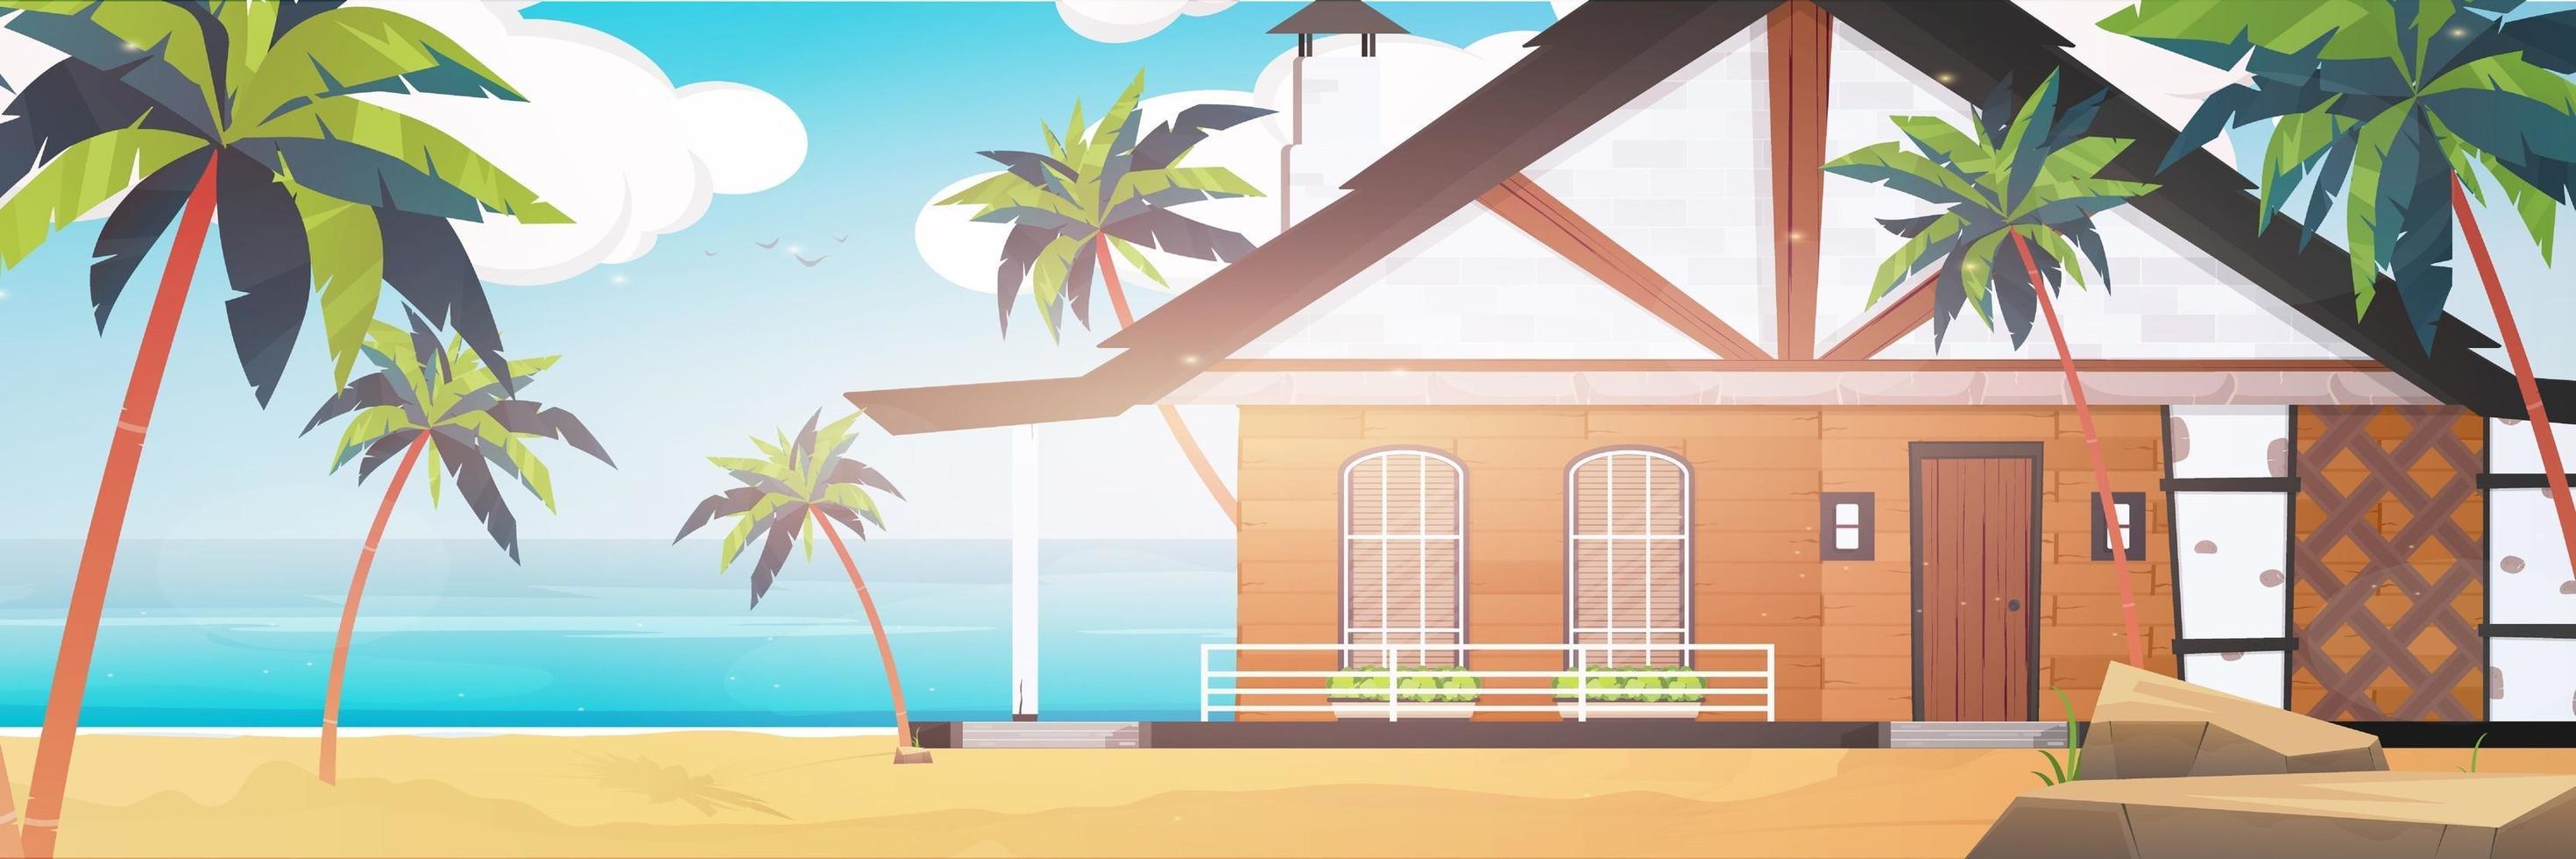 Villa on a sandy beach with palm trees. Summer vacation concept. Vector illustration. Cartoon style.